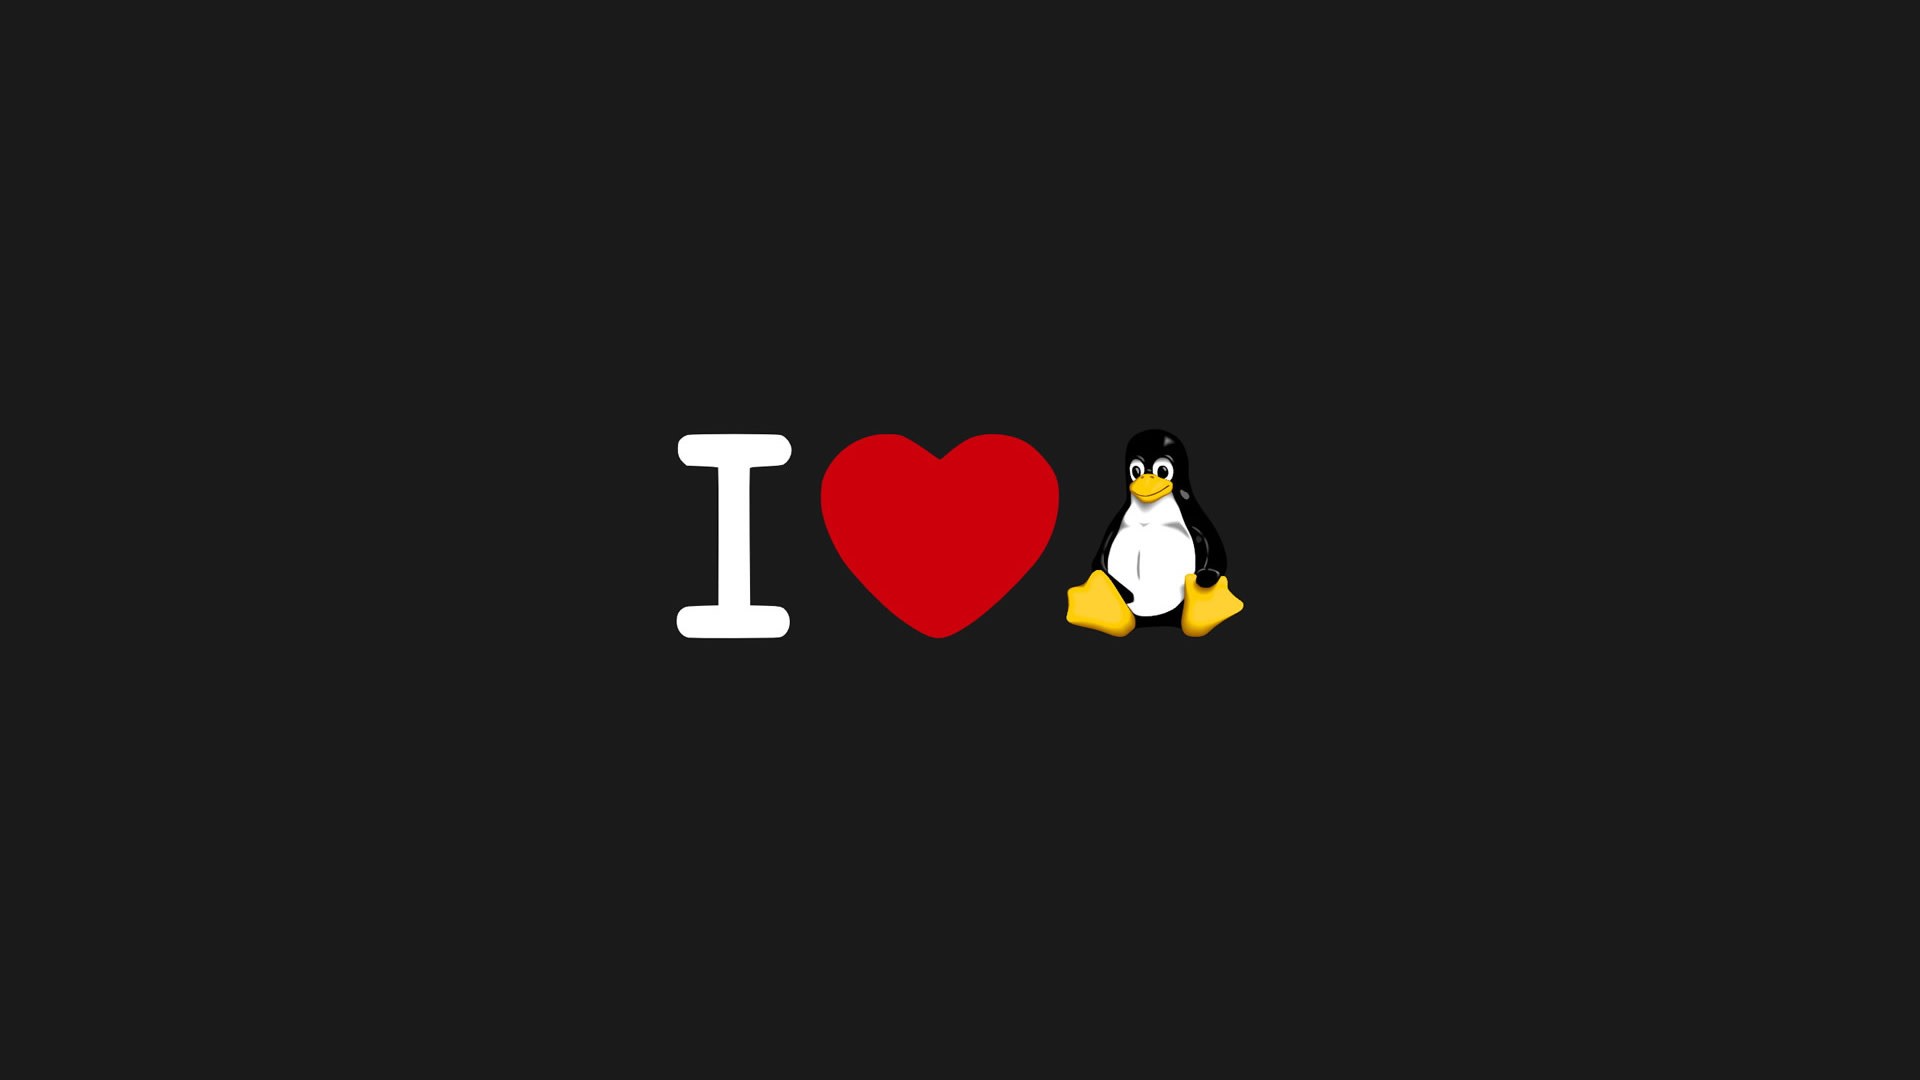 General 1920x1080 heart (design) minimalism simple background black background Linux operating system penguins